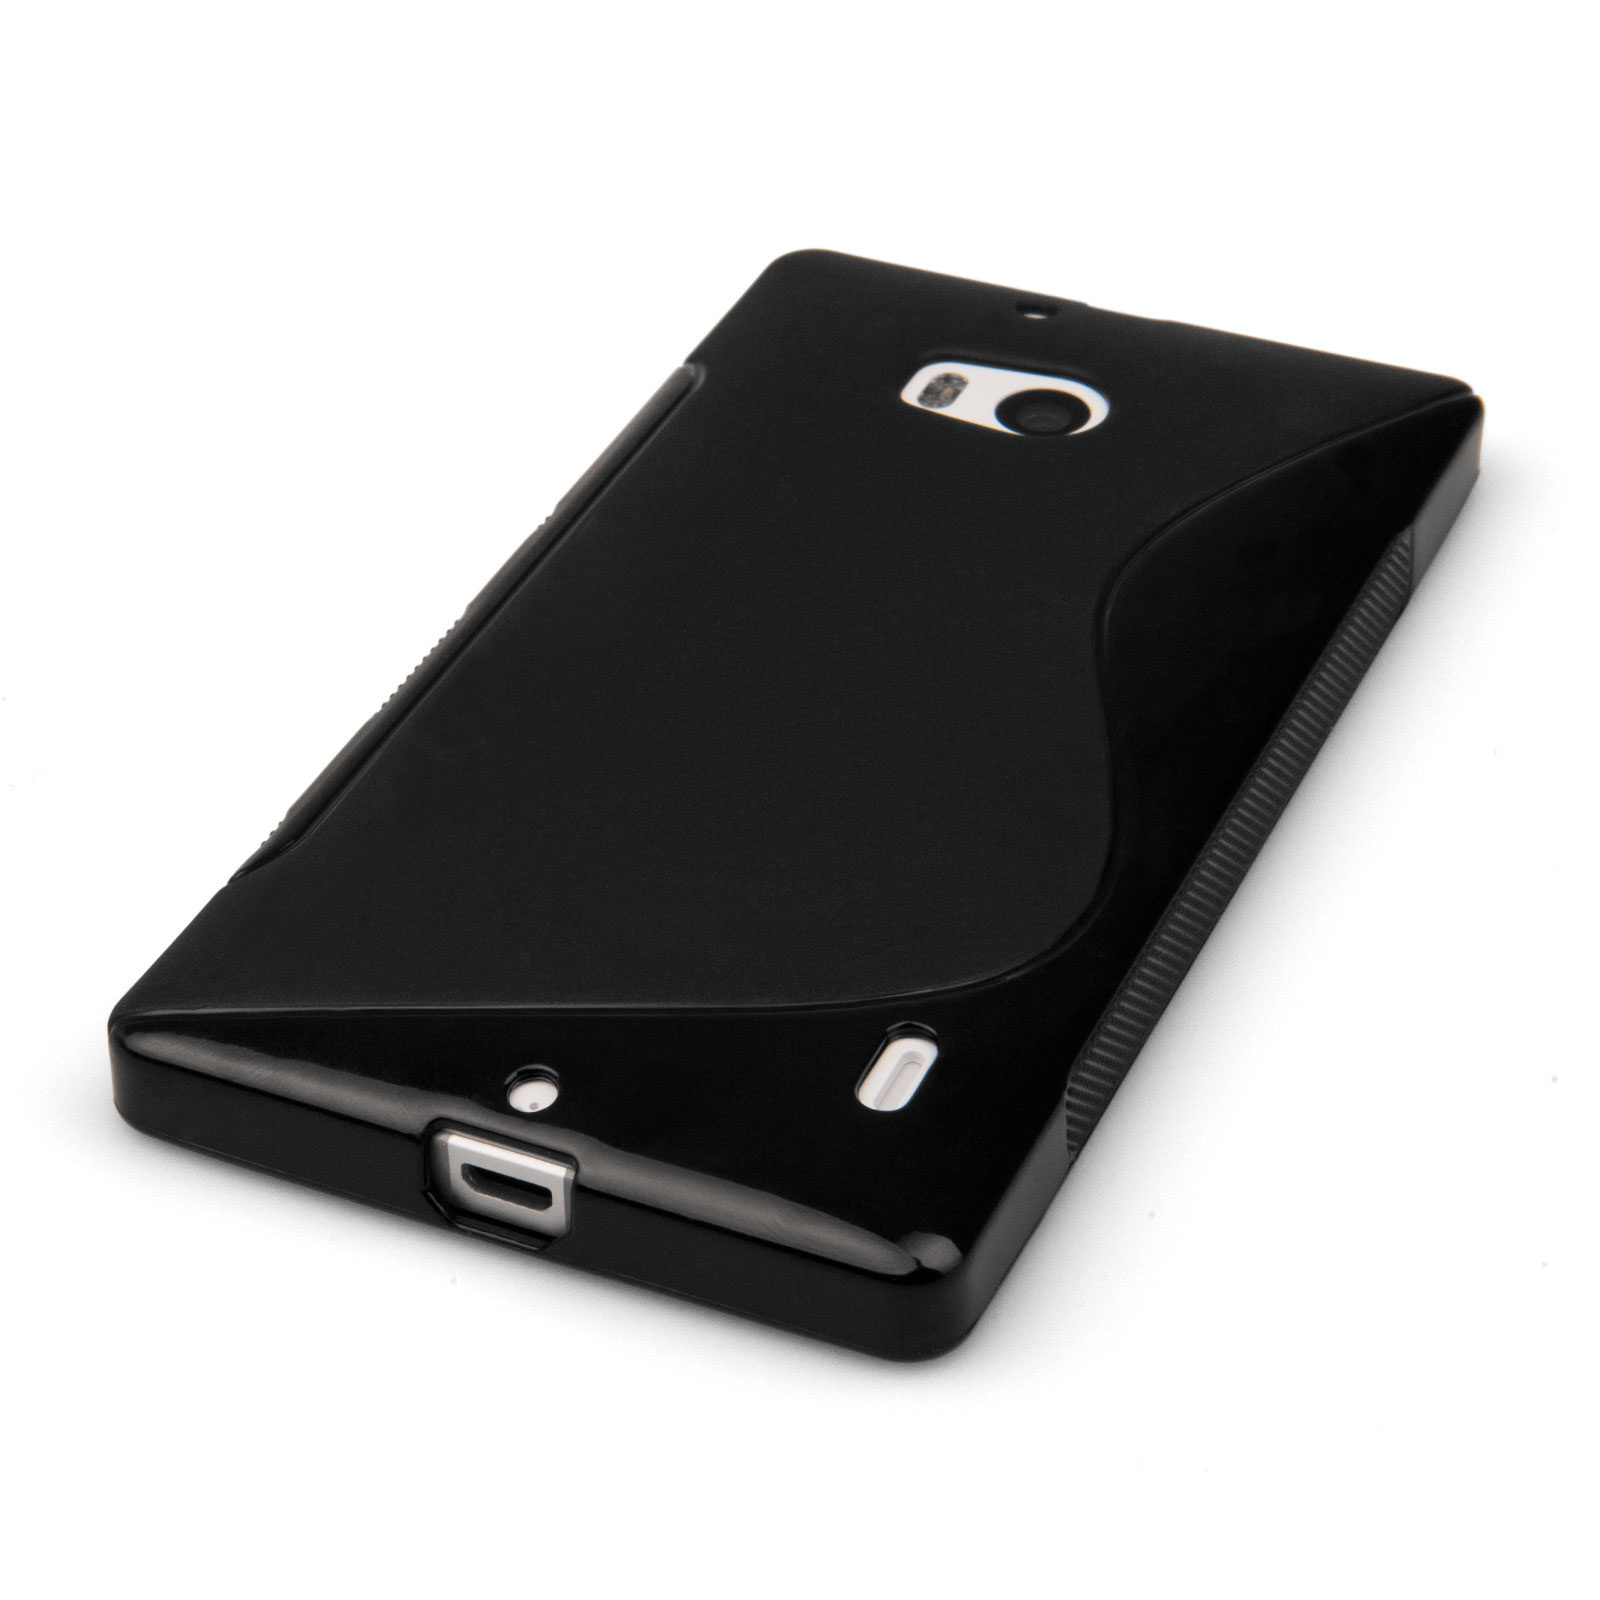 Caseflex Nokia Lumia 930 Silicone Gel S-Line Case - Black